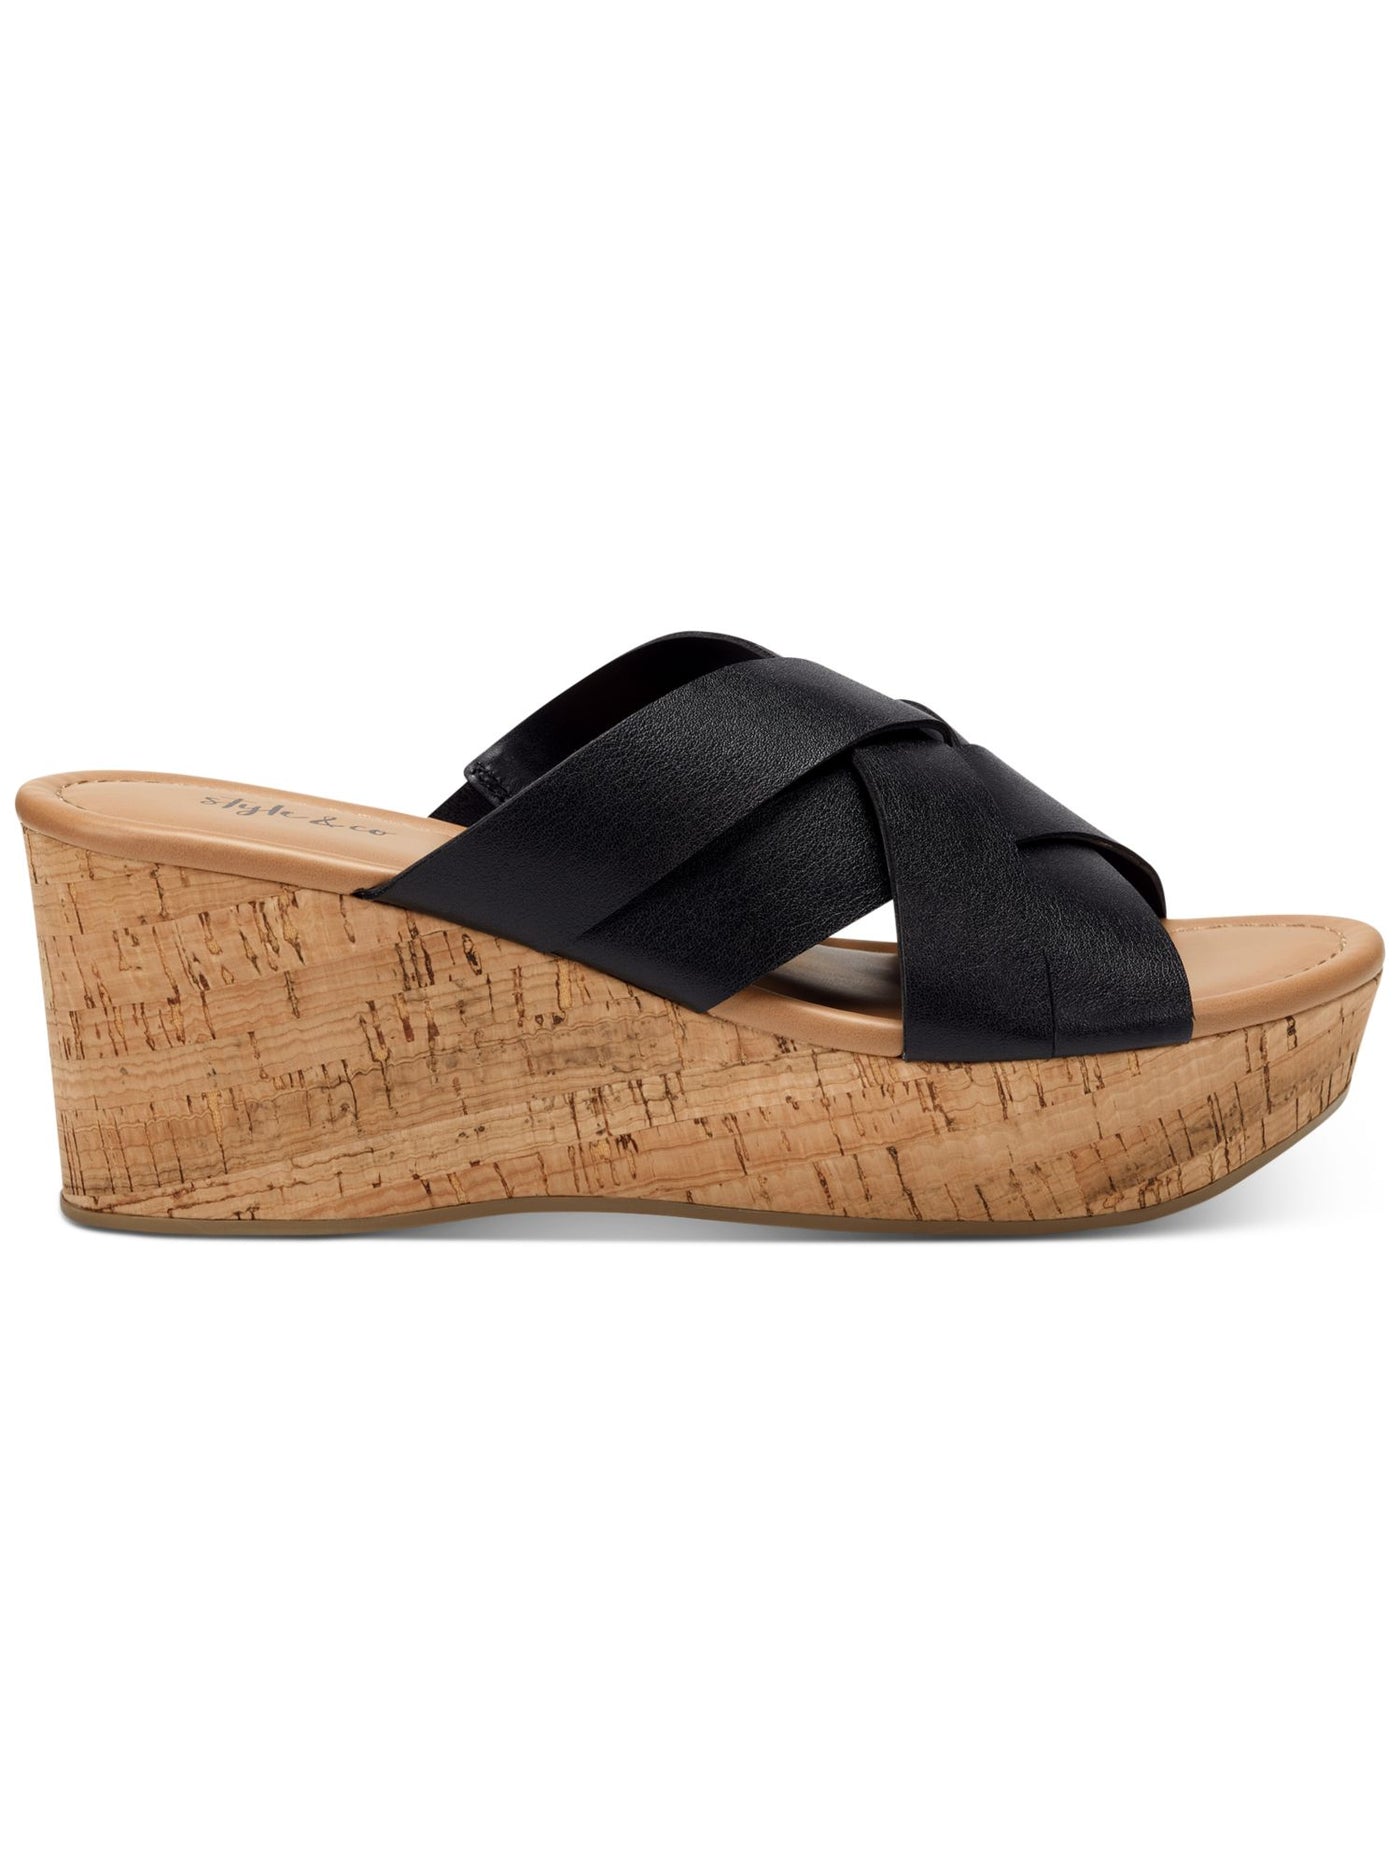 STYLE & COMPANY Womens Black 1-1/2" Platform Comfort Woven Violettee Round Toe Wedge Slip On Heeled Sandal 7.5 M